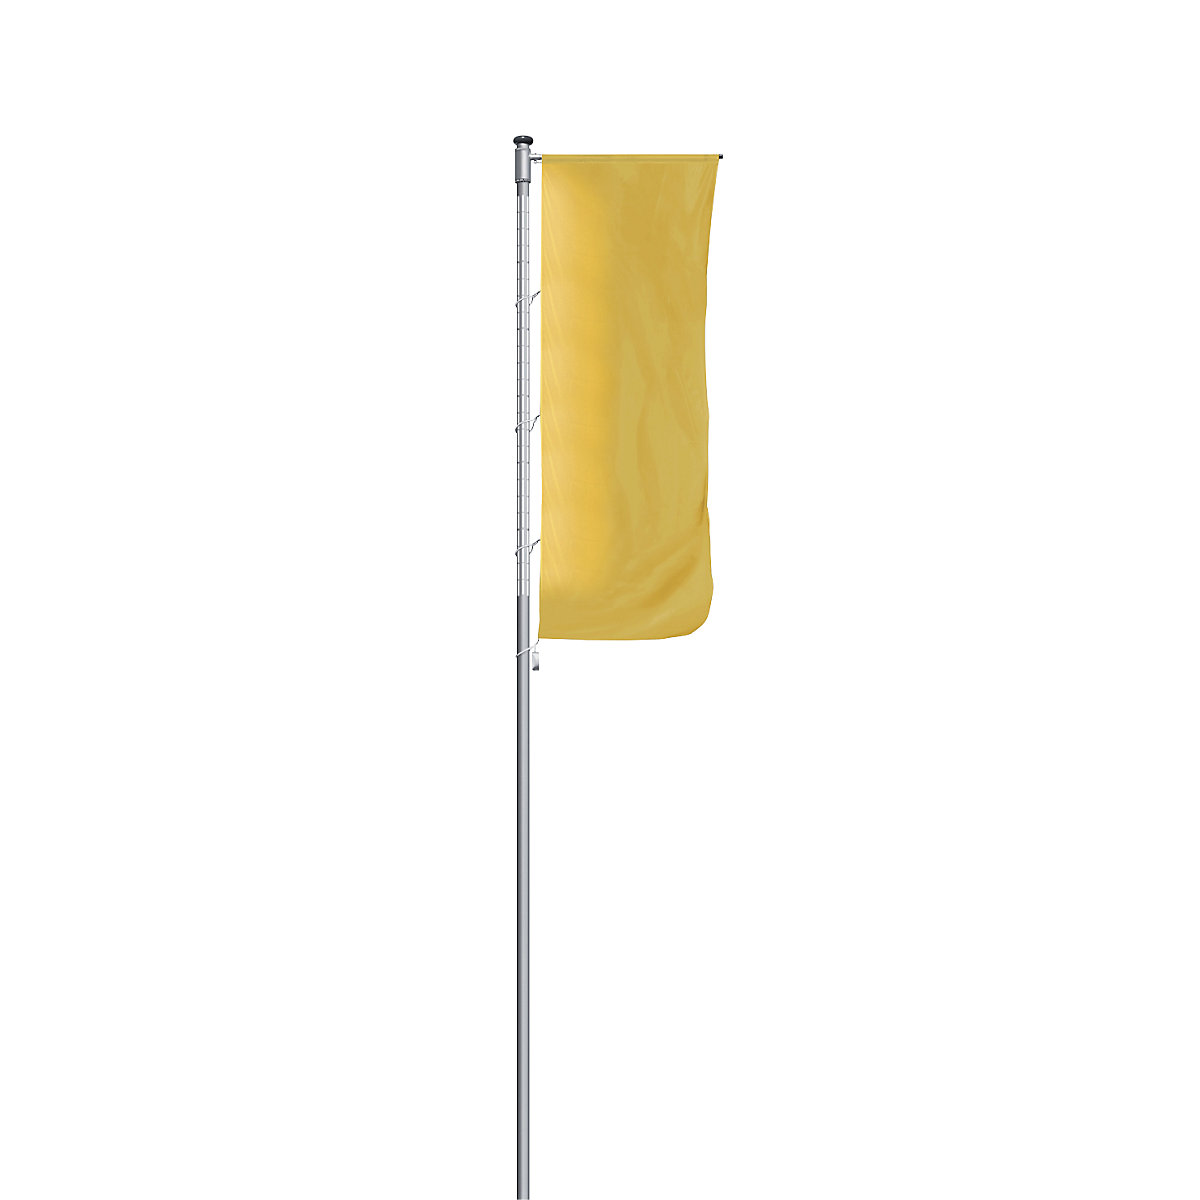 Aluminium flag pole, illuminated - Mannus